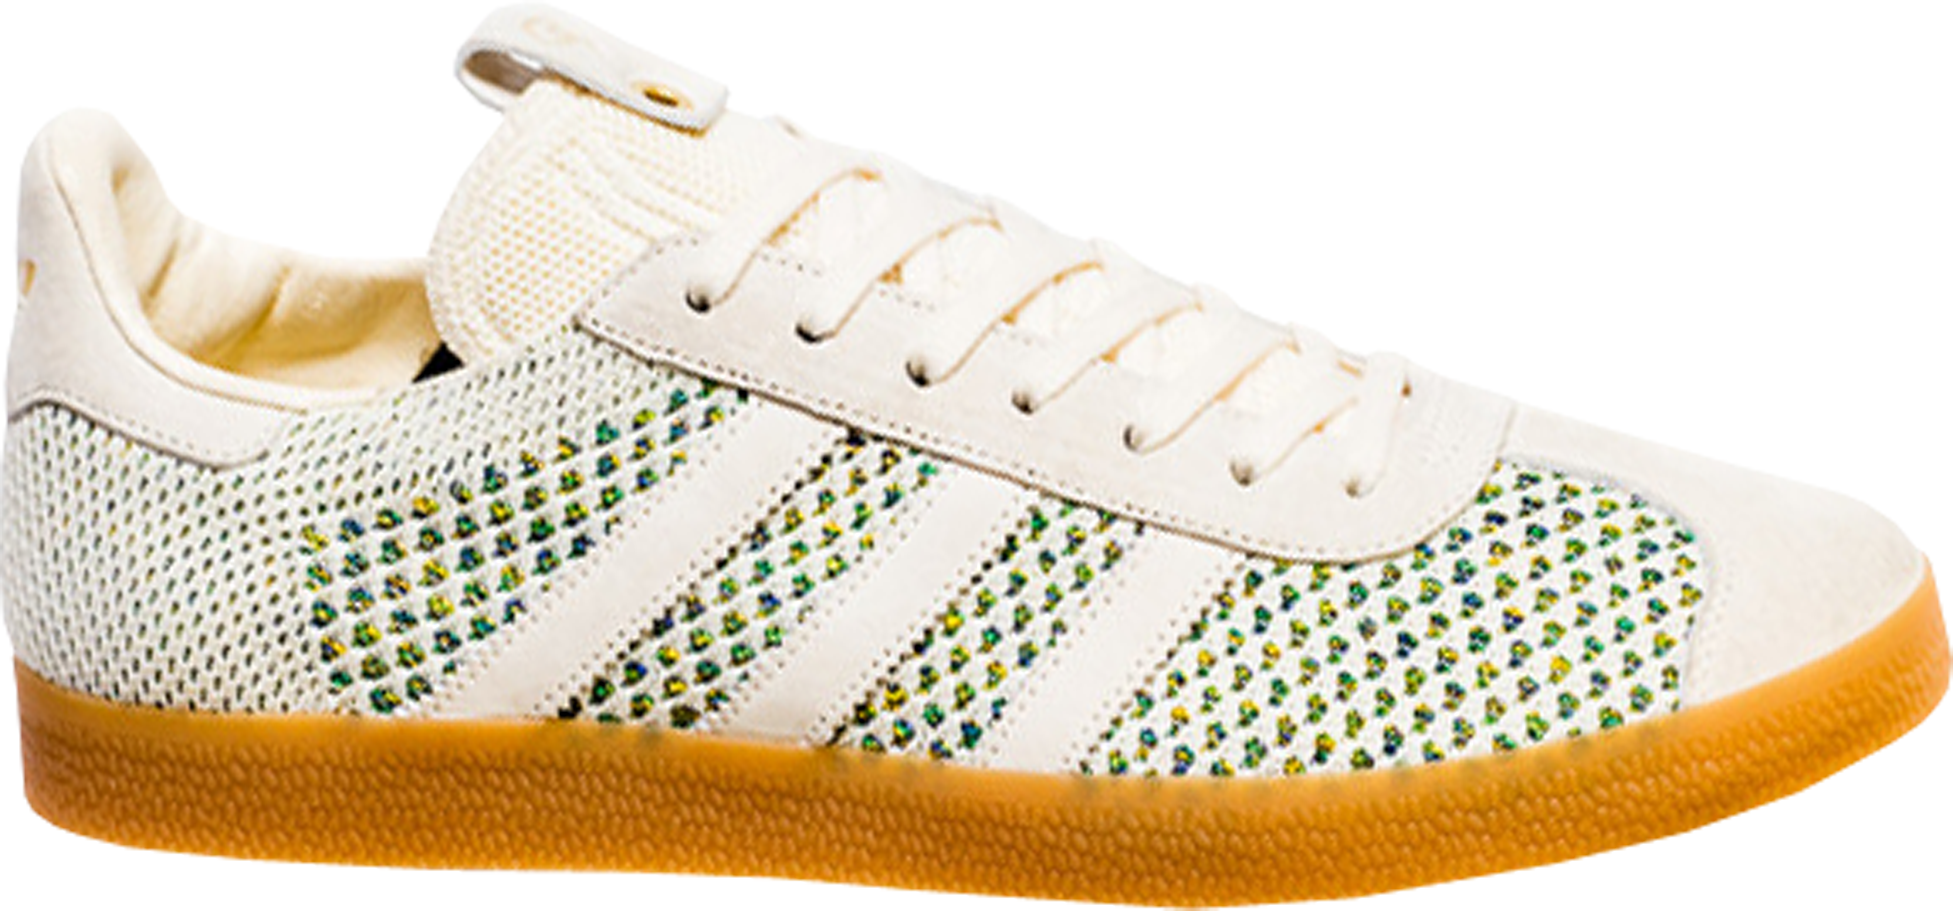 sneaker politics x adidas gazelle